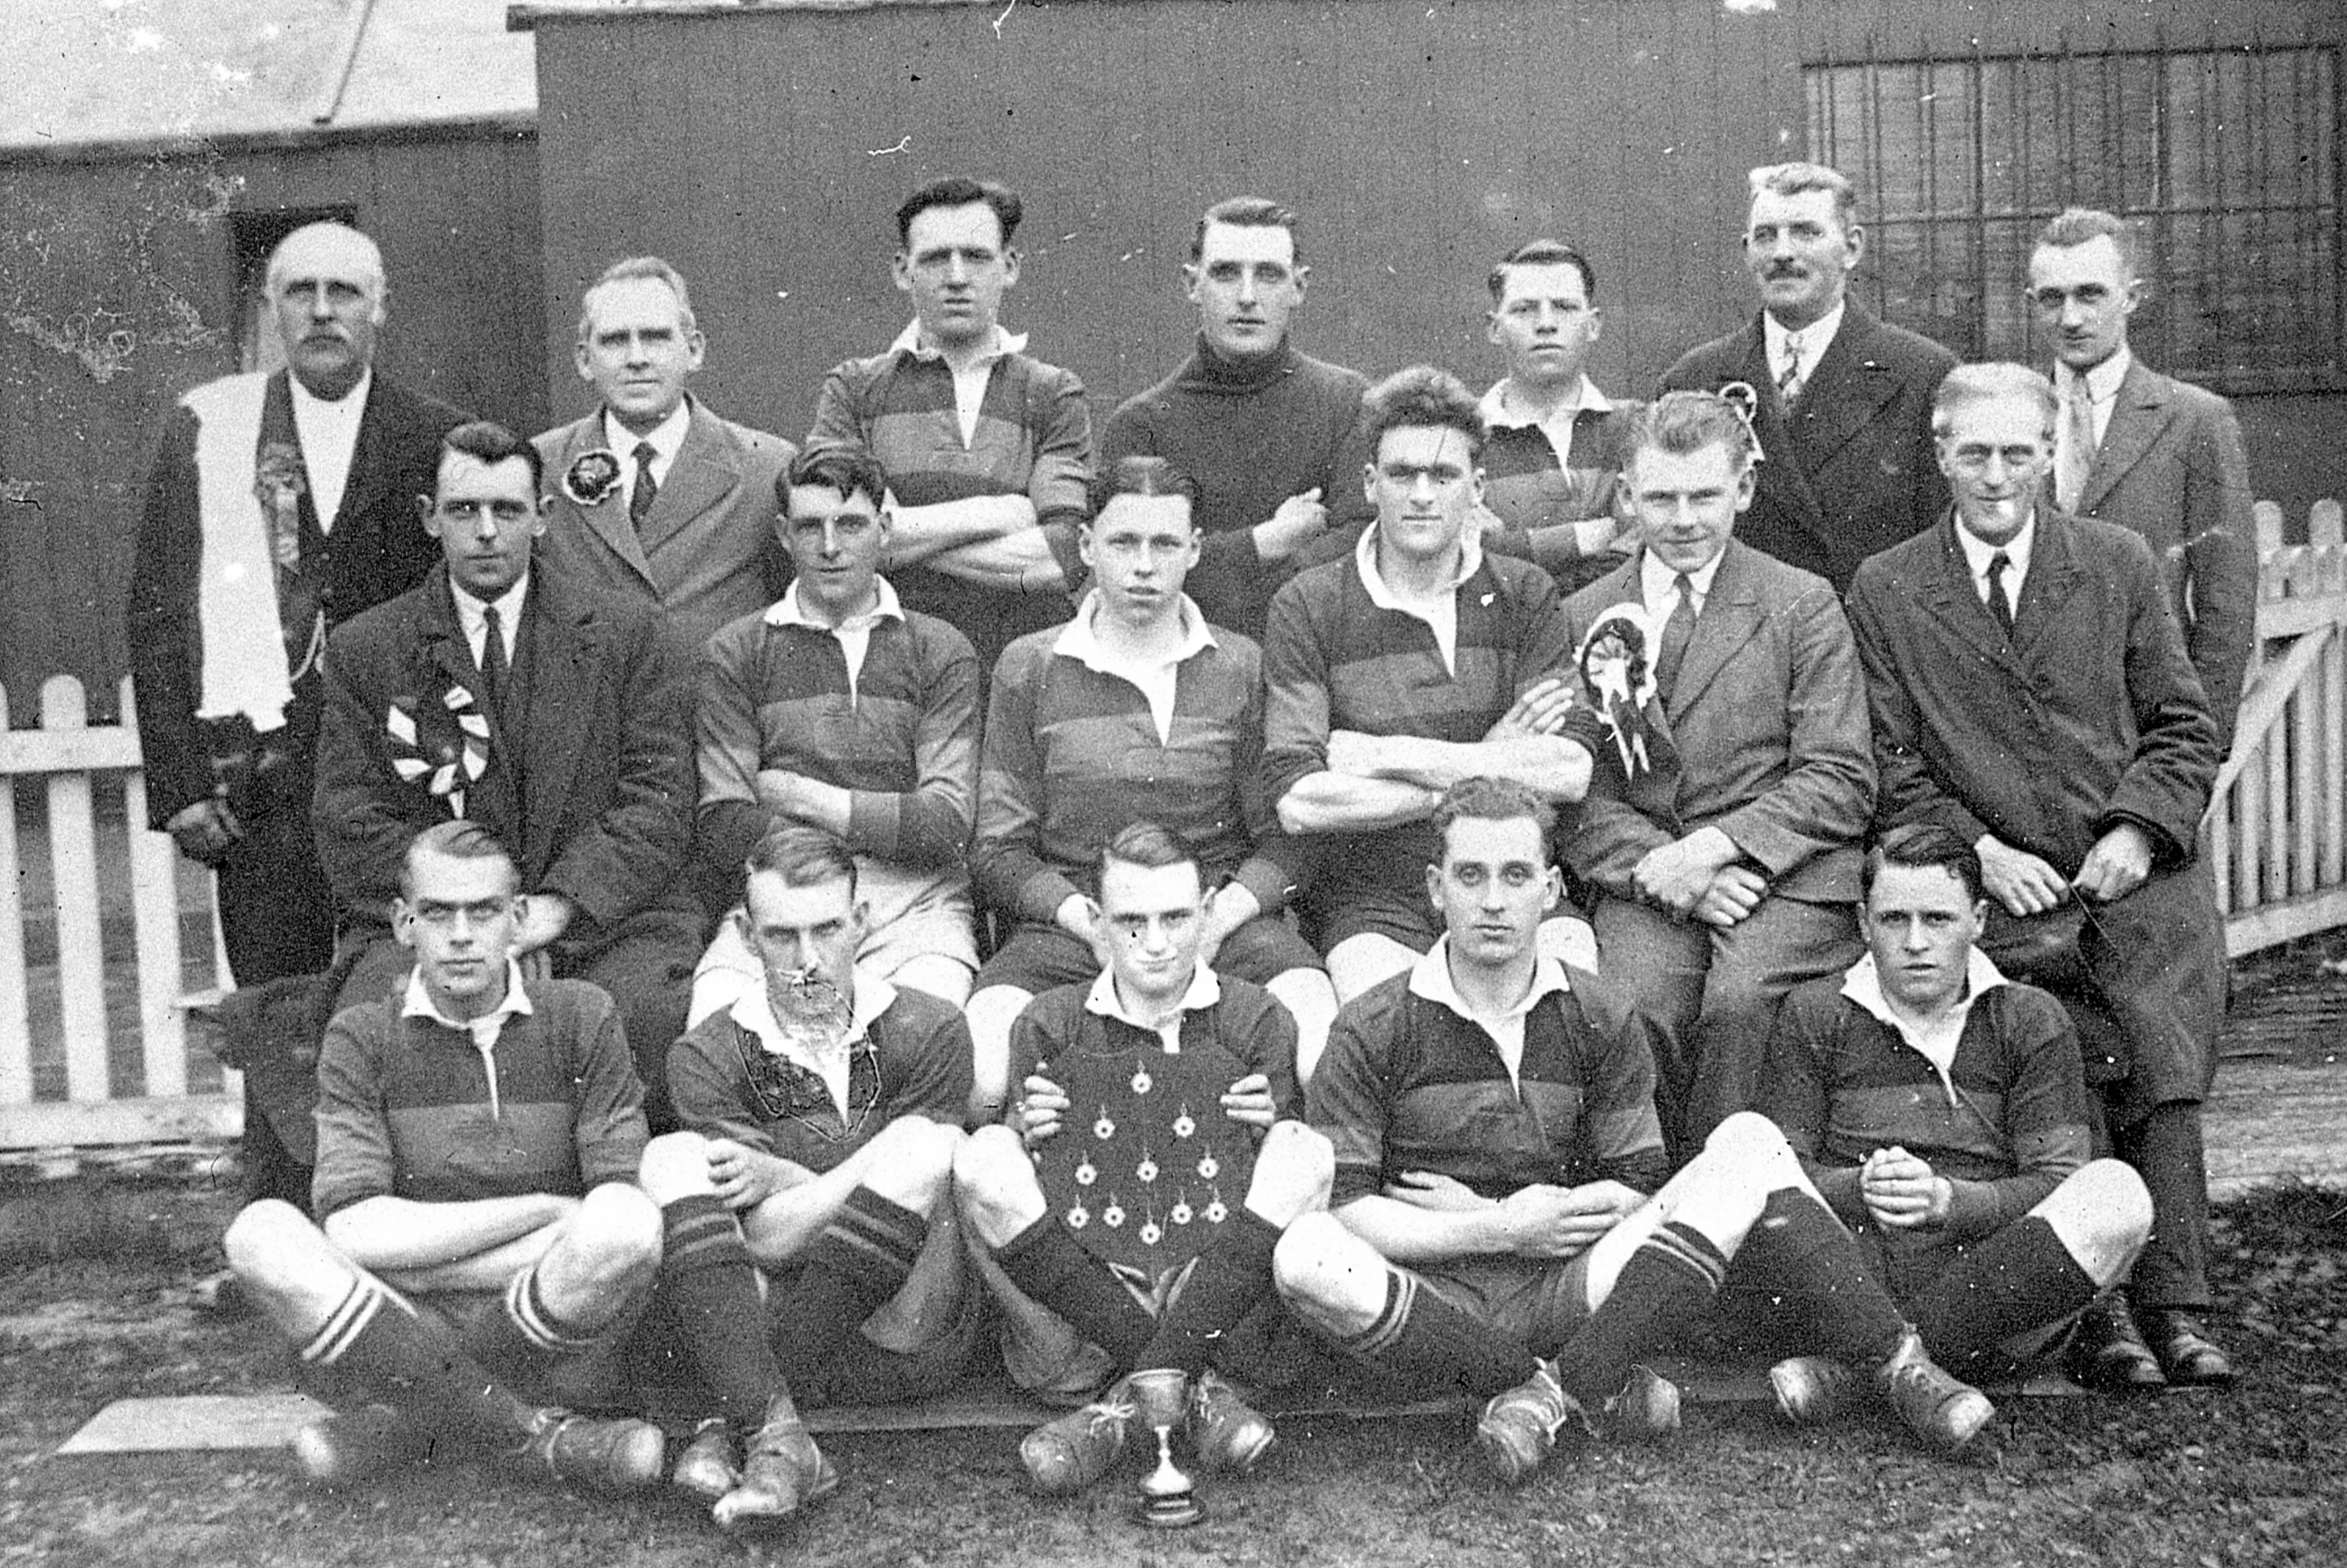 1950s Football Team